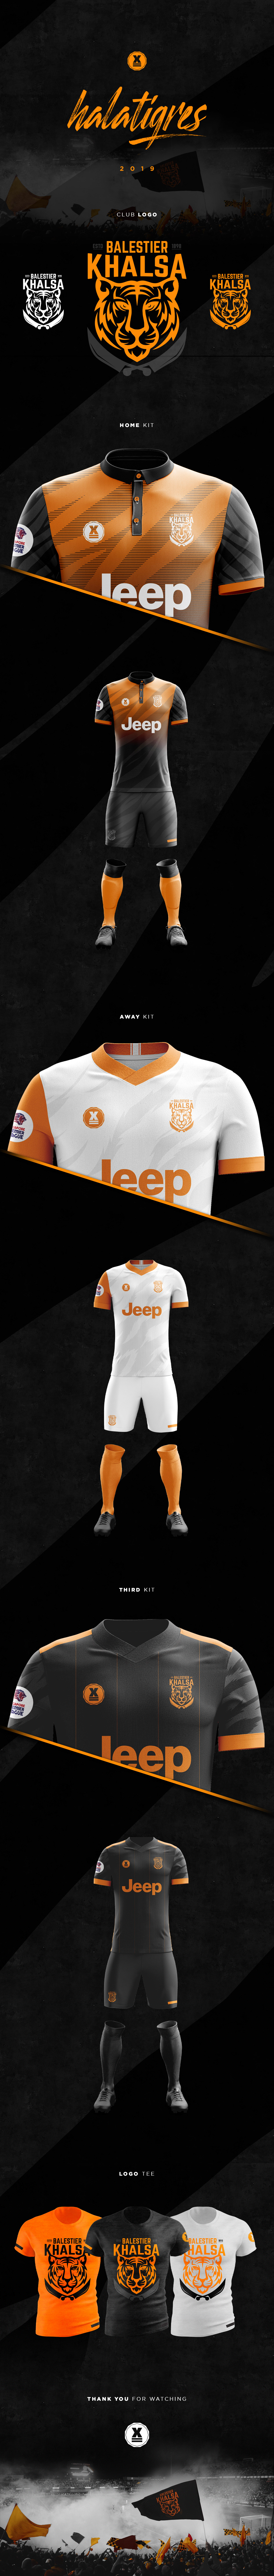 concept fantasy football soccer kit jersey branding  singapore